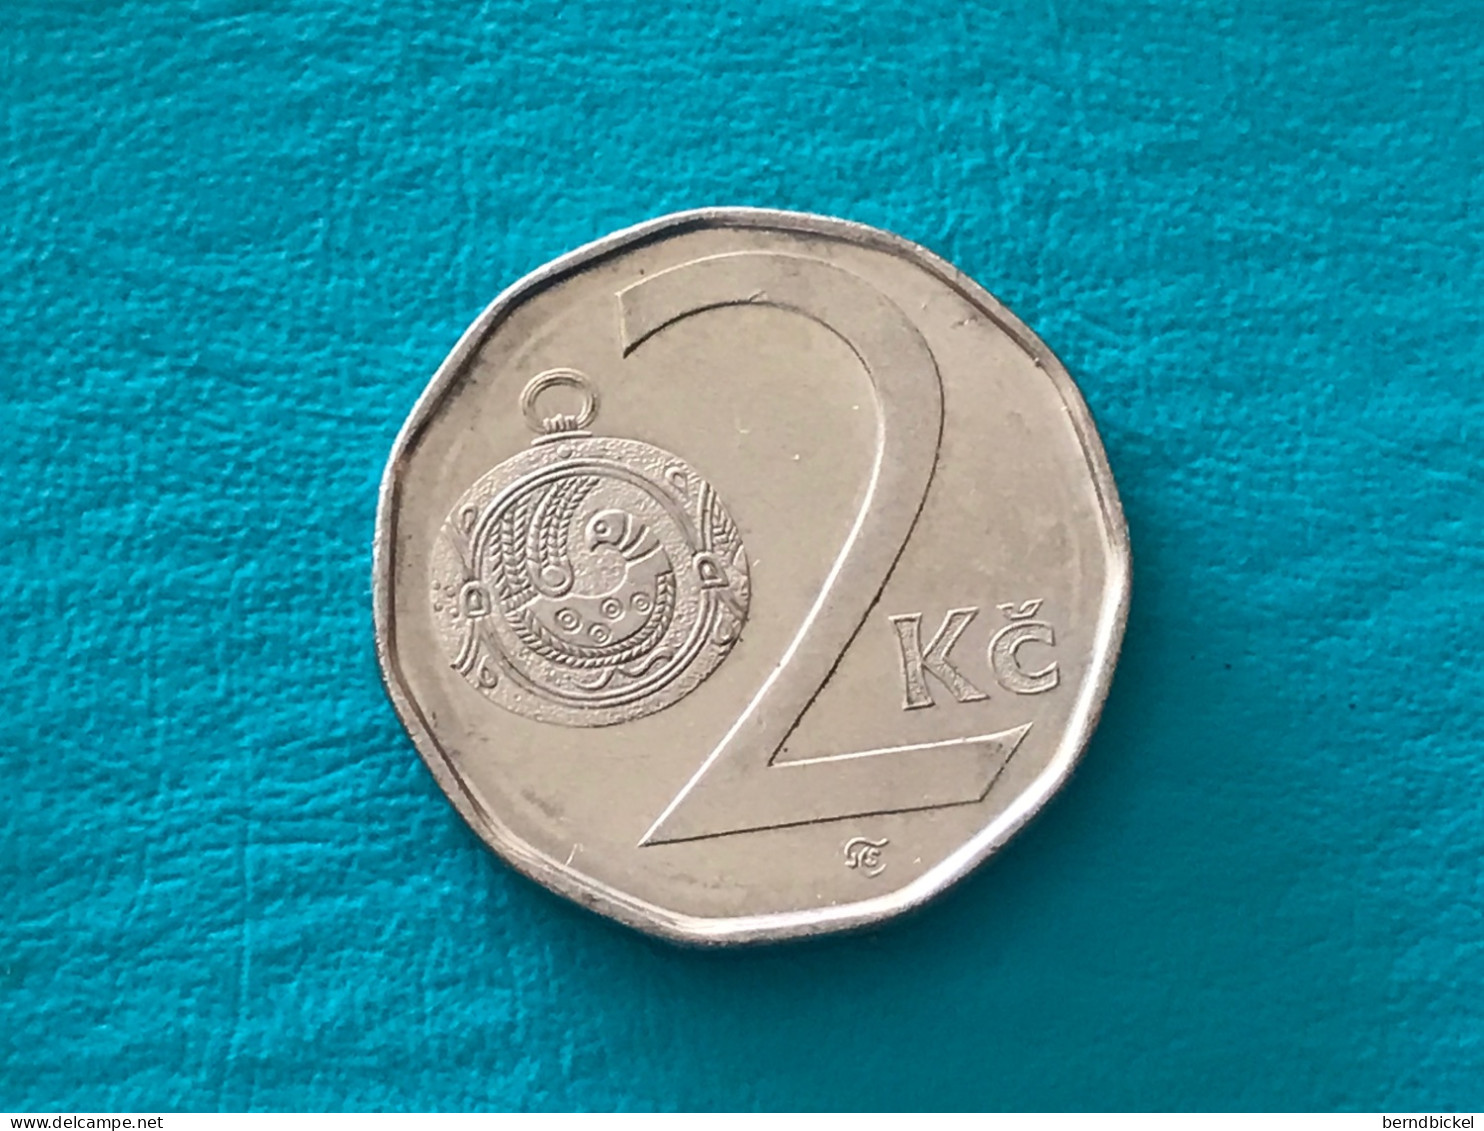 Münze Münzen Umlaufmünze Tschechien 2 Koruna 2001 - Czech Republic